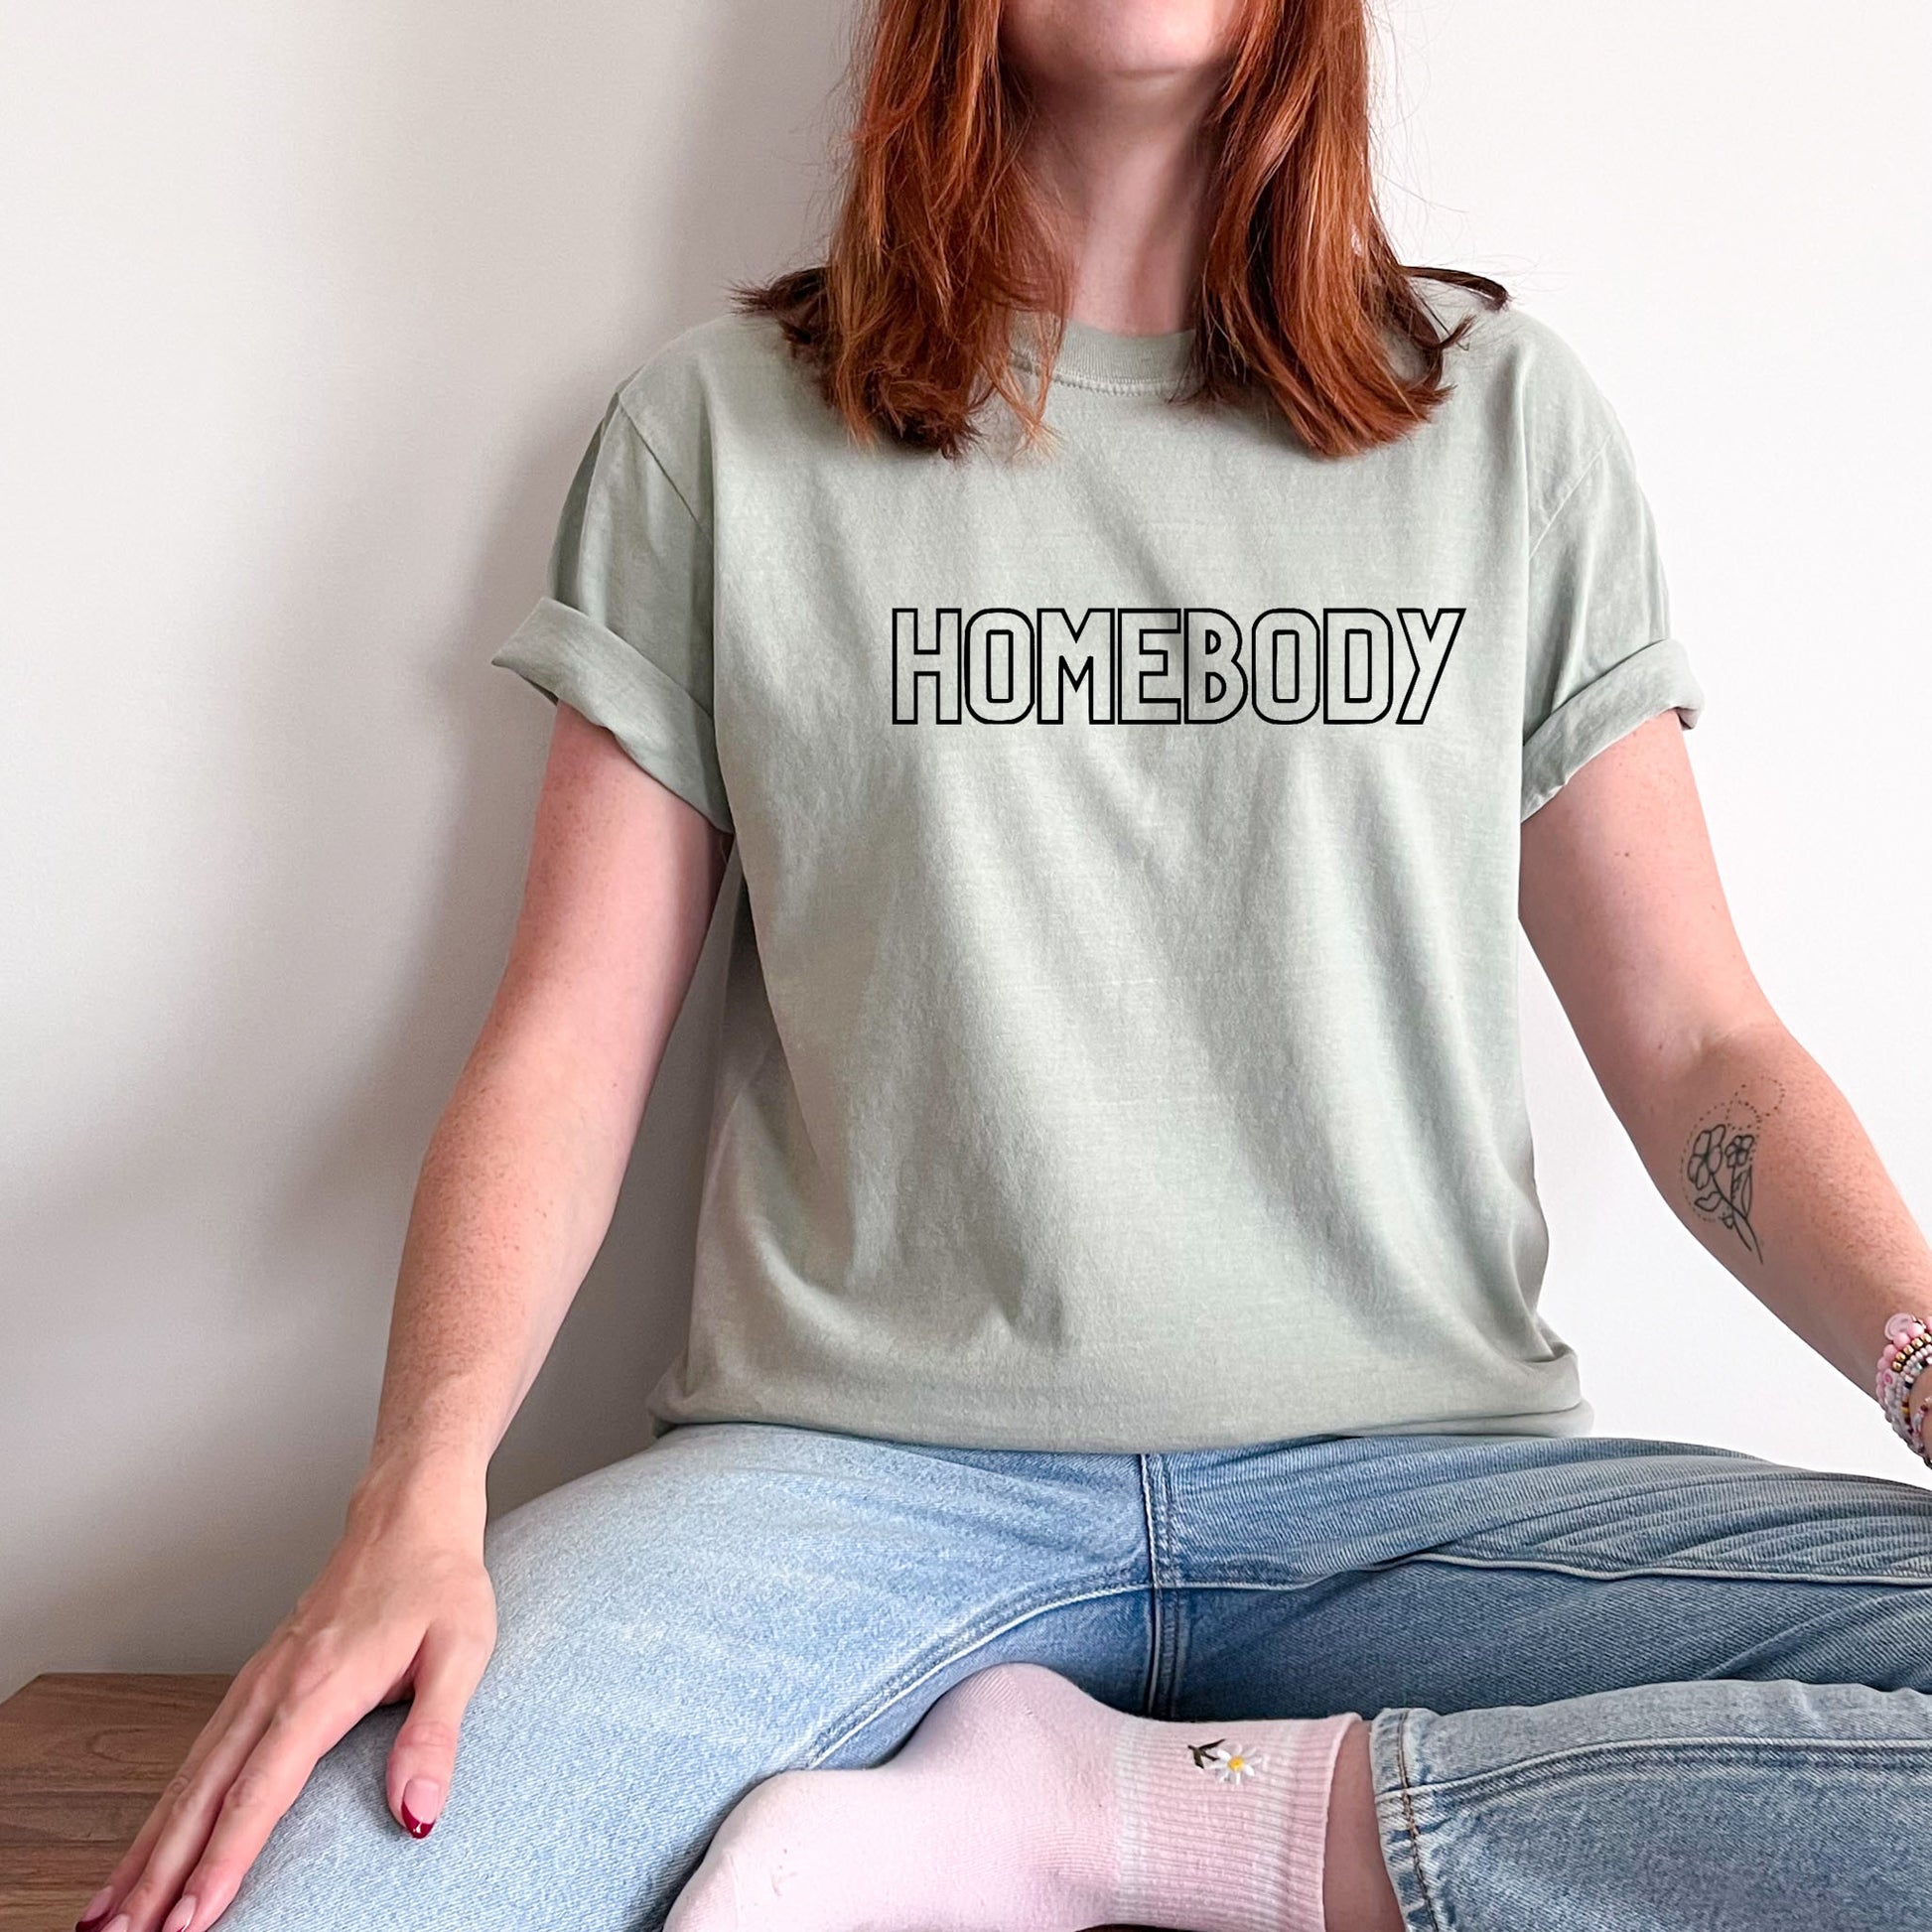 Homebody - Busy Ferns